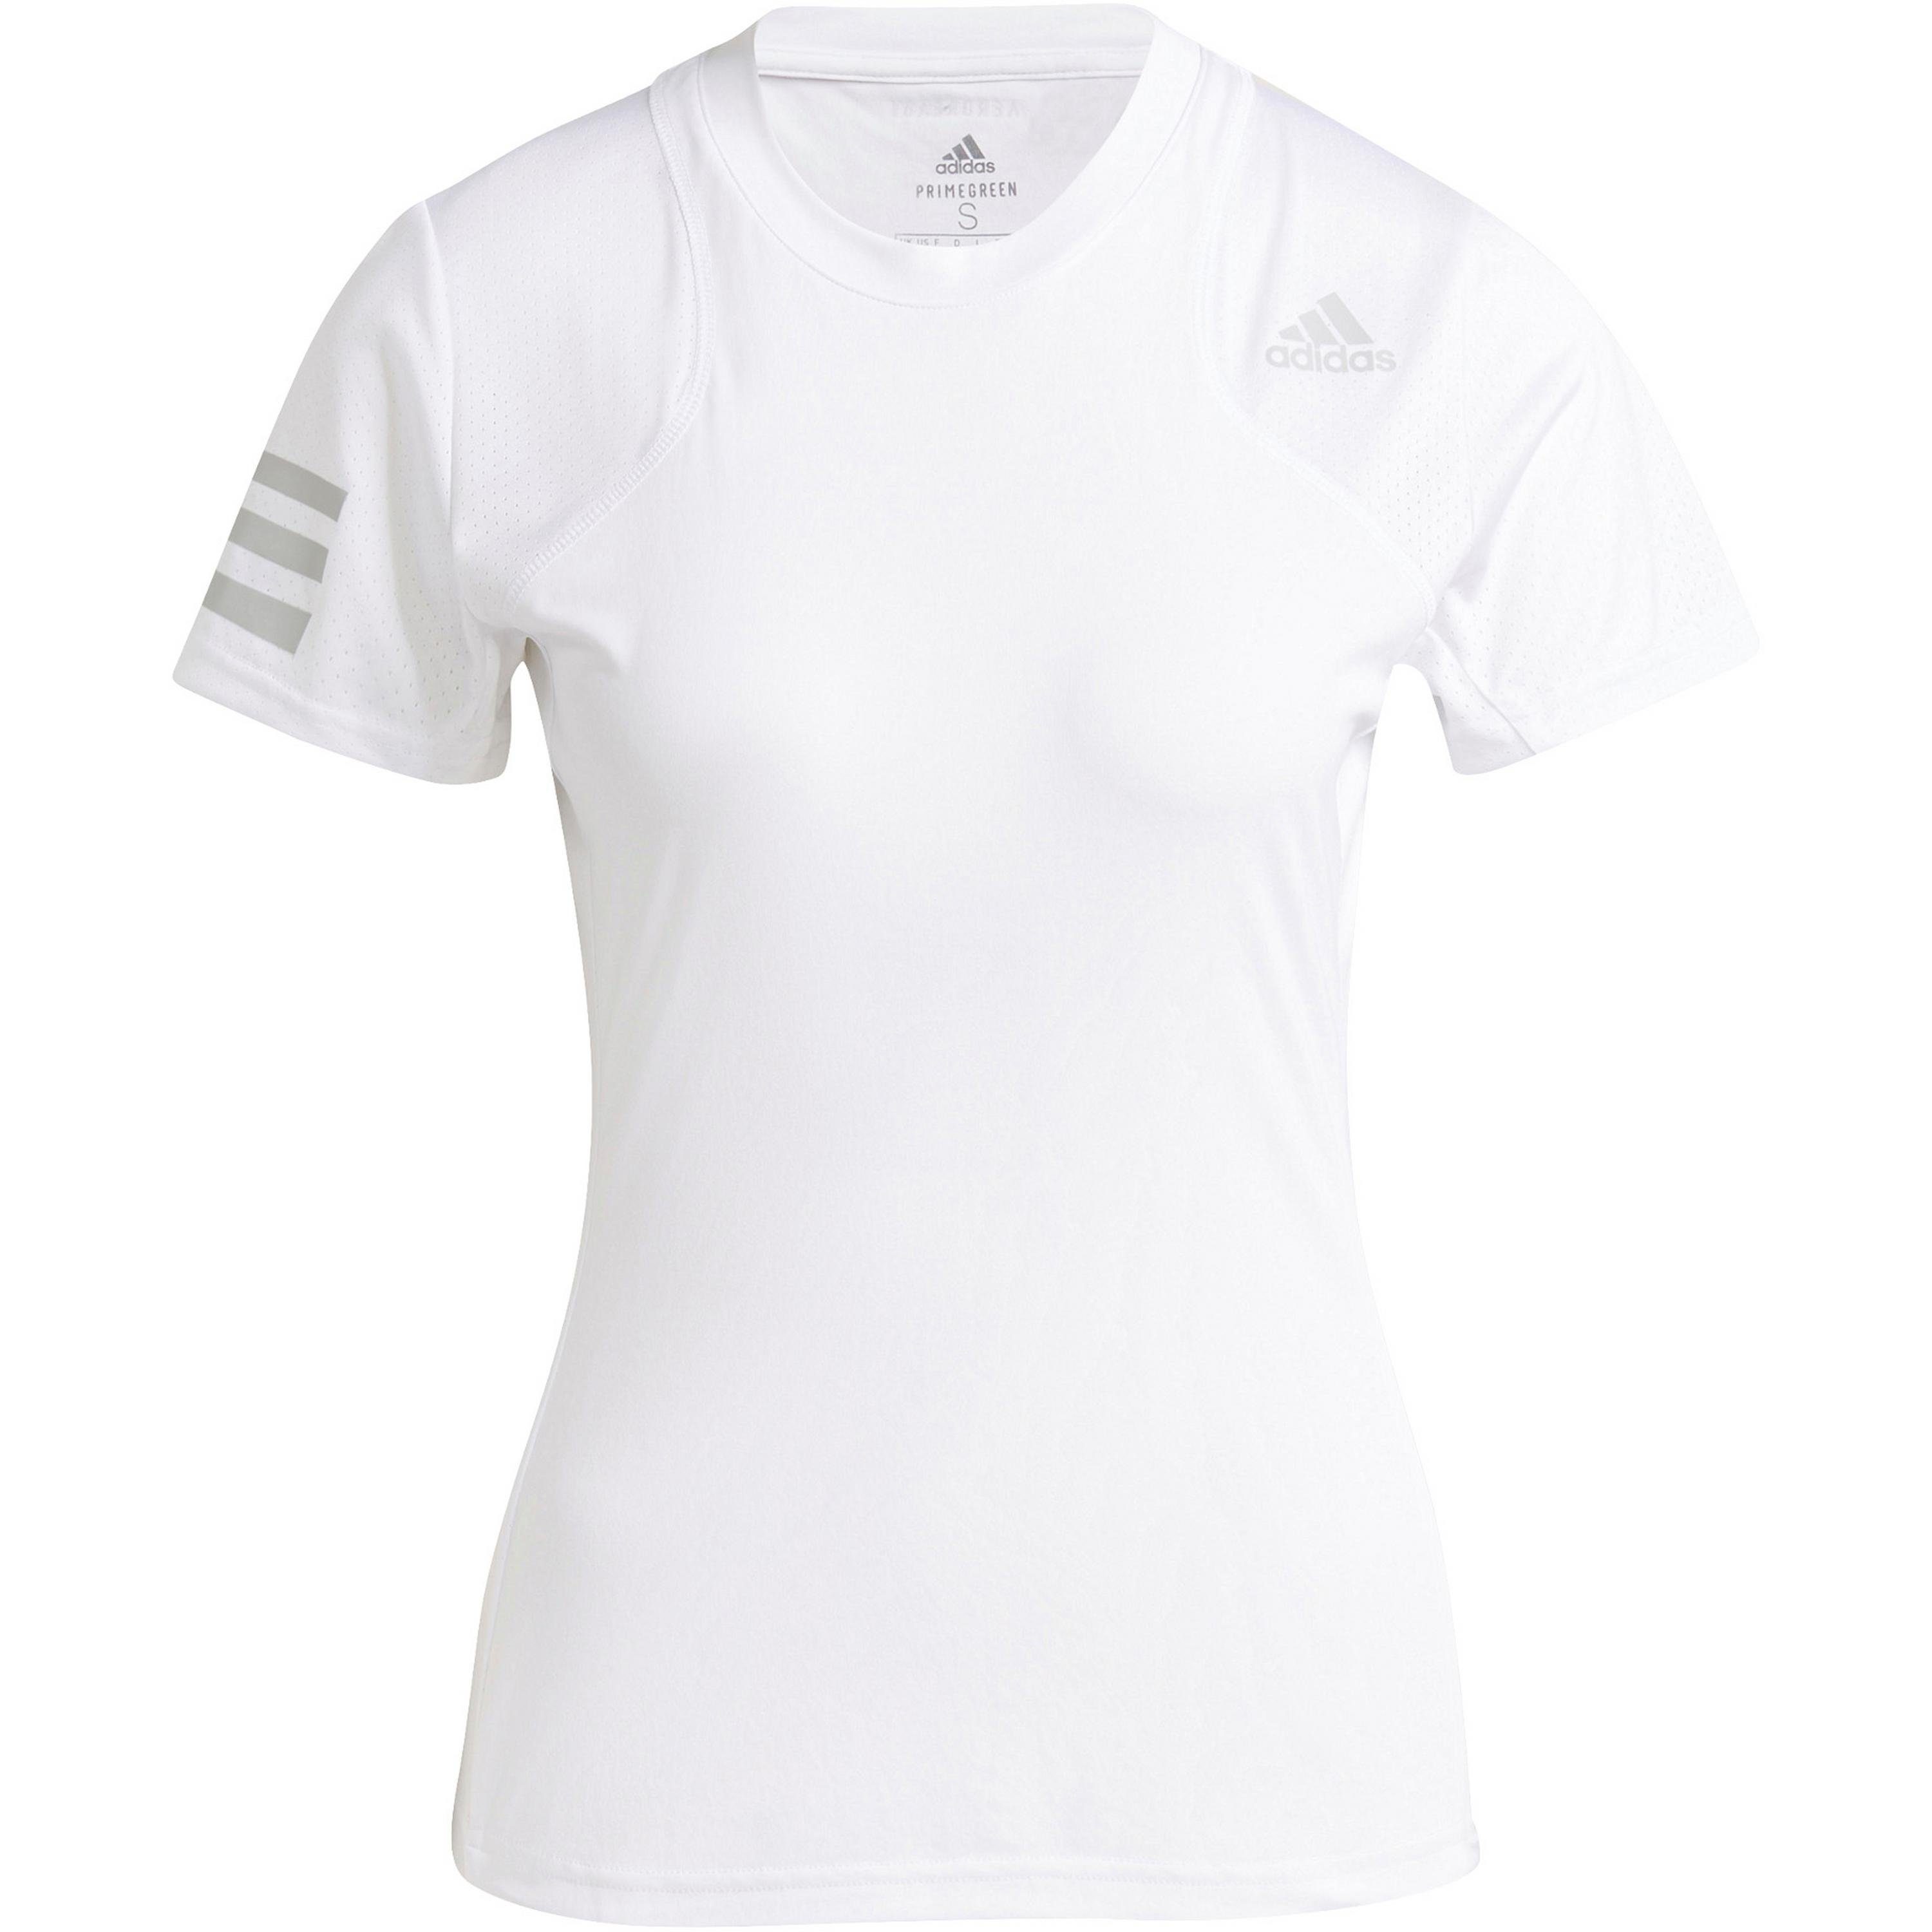 adidas-performance-tennisshirt-club-white-grey-two.jpg?$formatz$